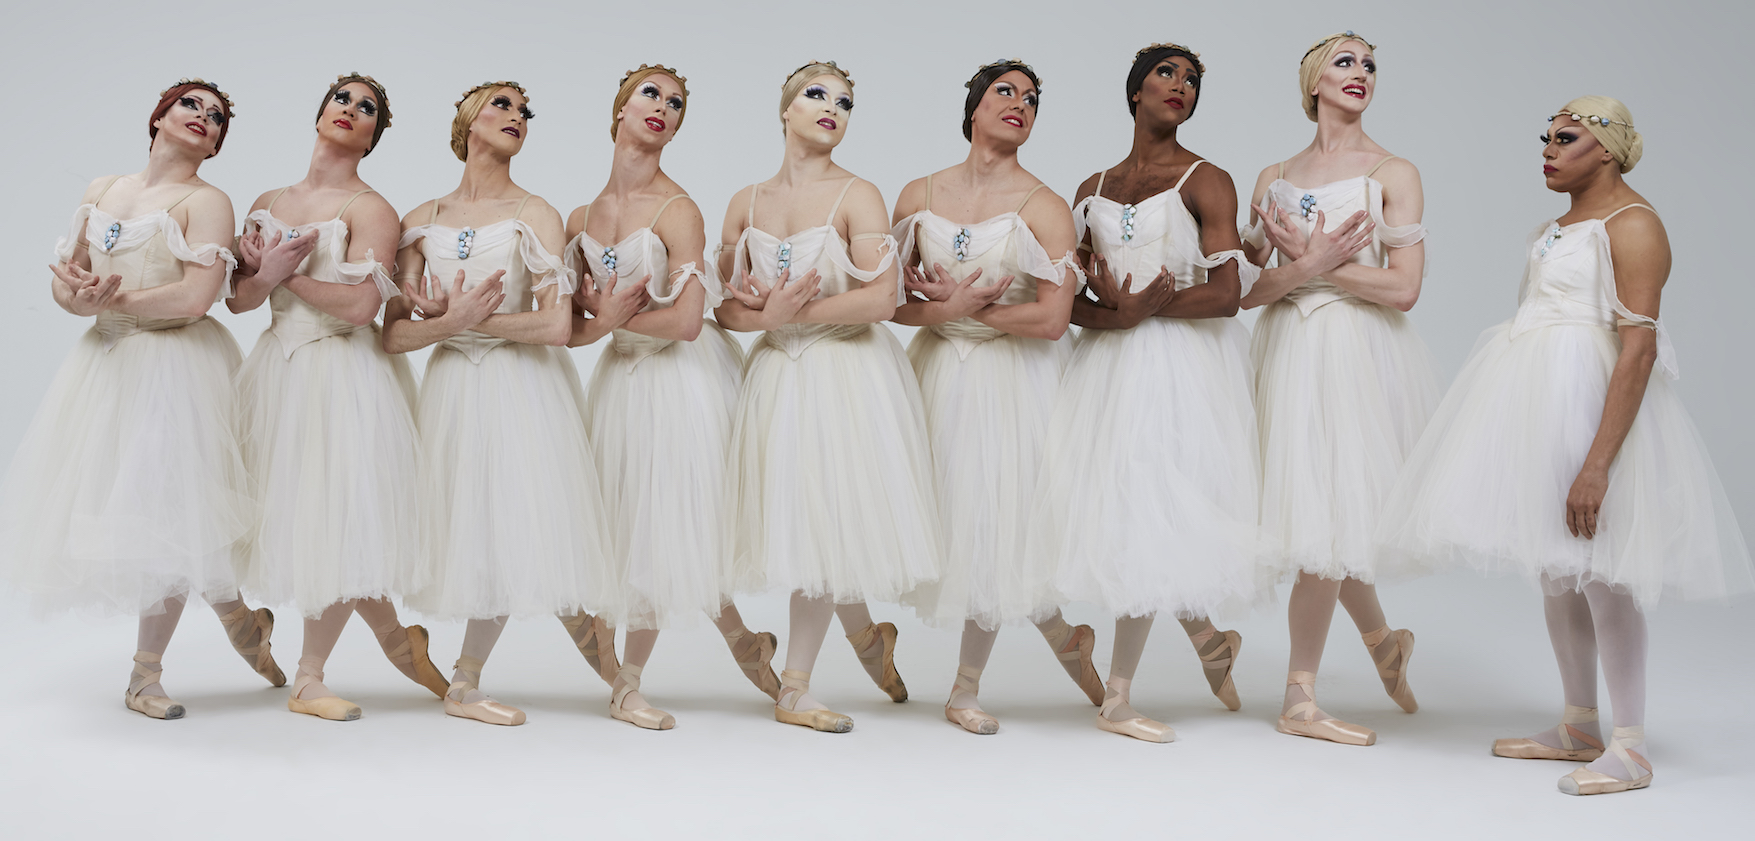 Les Sylphides by Les Ballets Trockadero de Monte Carlo. Photo: Zoran Jelenic